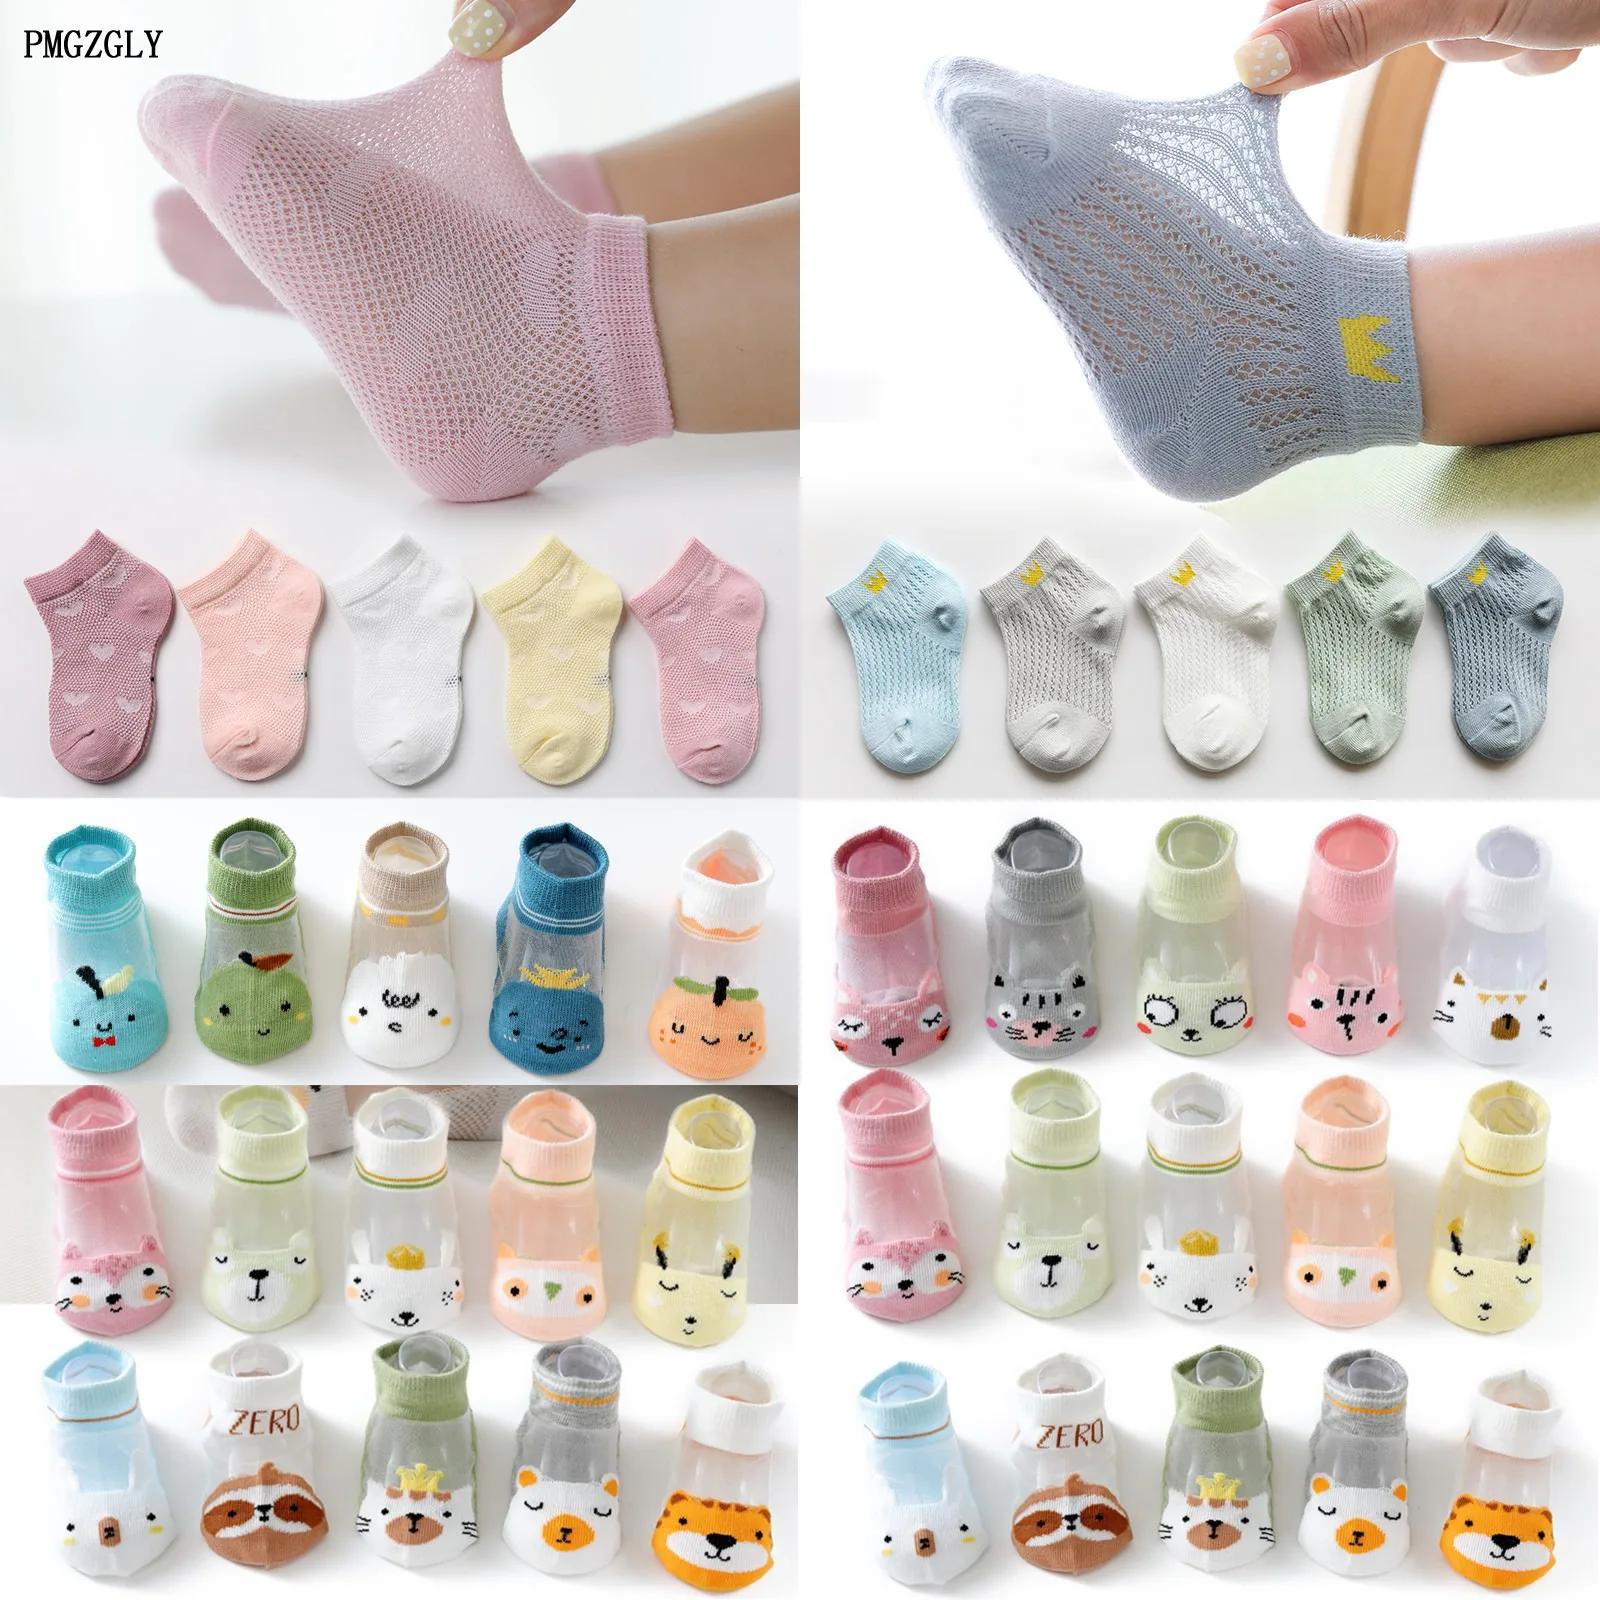 5pairs/lot NewBorn Baby Socks Thicken Cartoon Comfort Cotton Newborn Socks Kids Boy For 0-2 Years Baby Clothes Acces